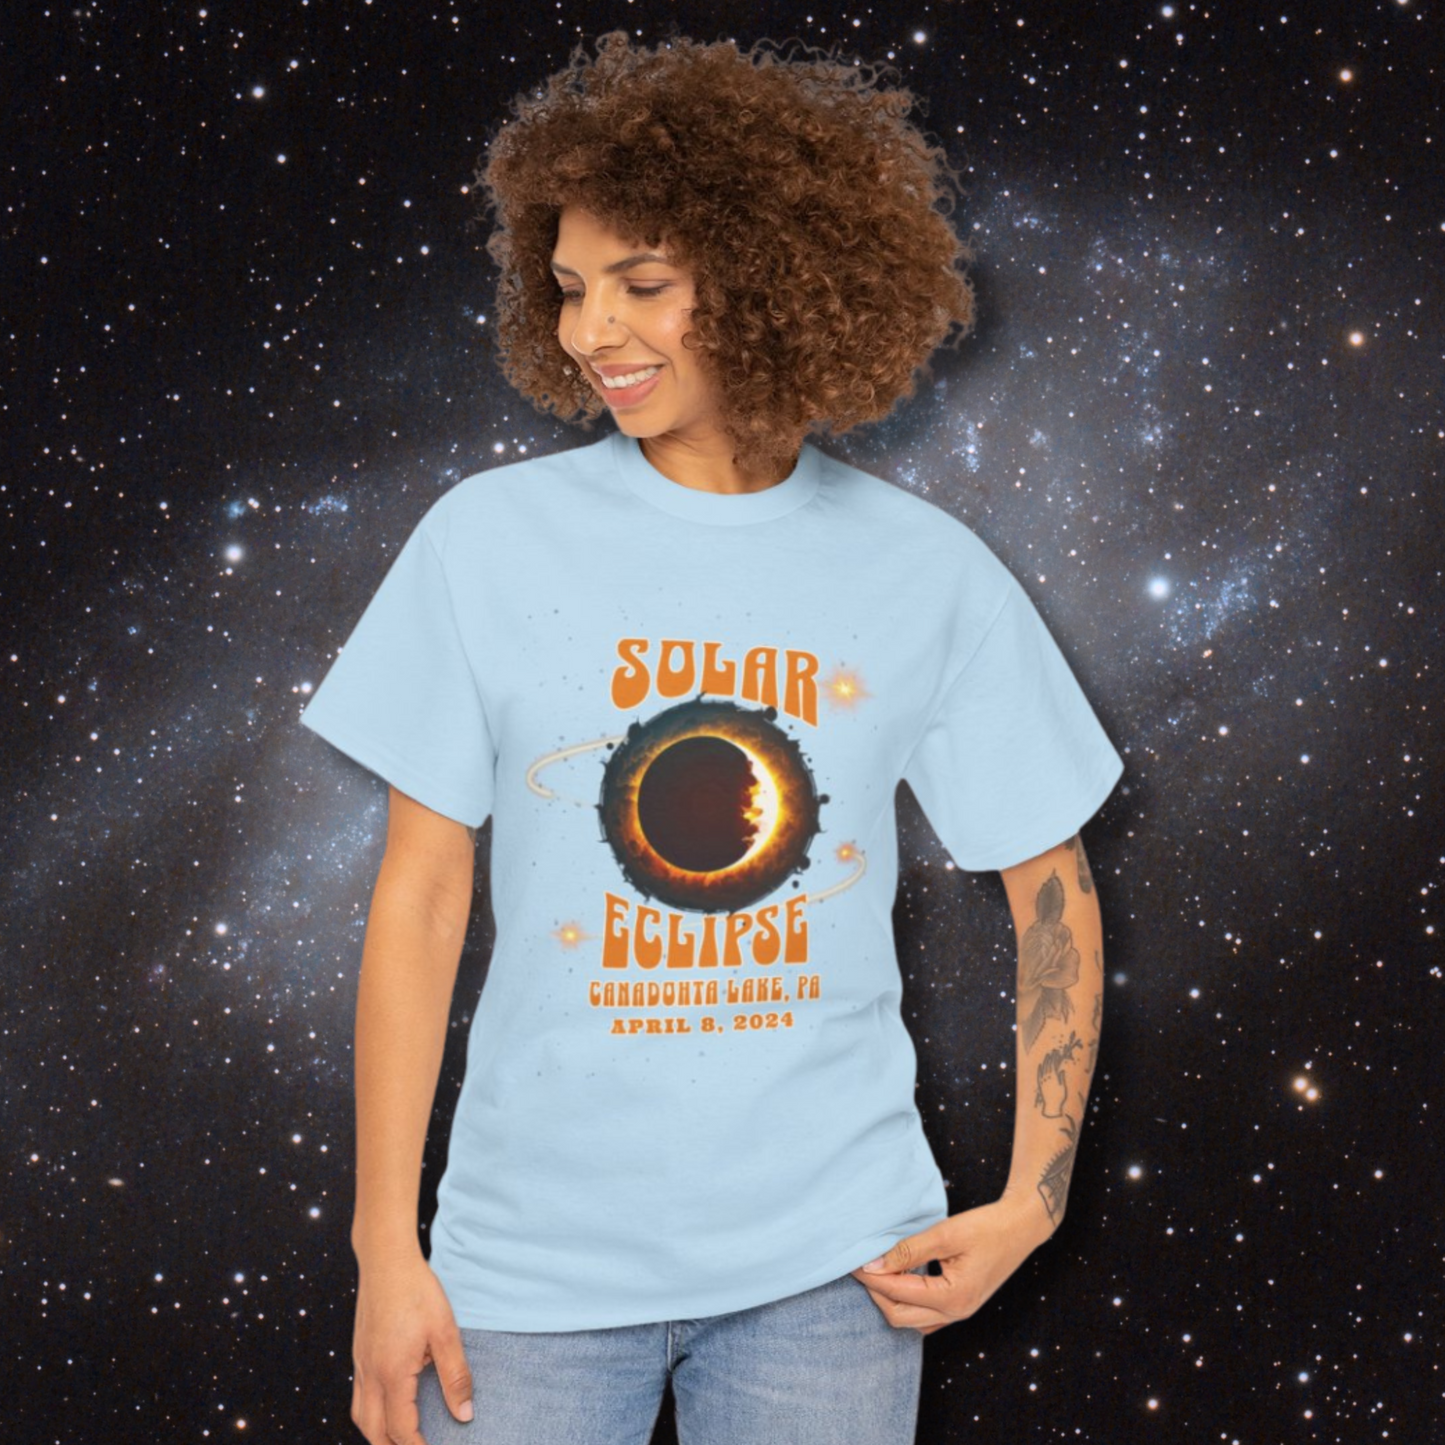 Solar Eclipse 2024 Commemorative Merch - Canadohta Lake, PA - Limited Edition T-Shirts